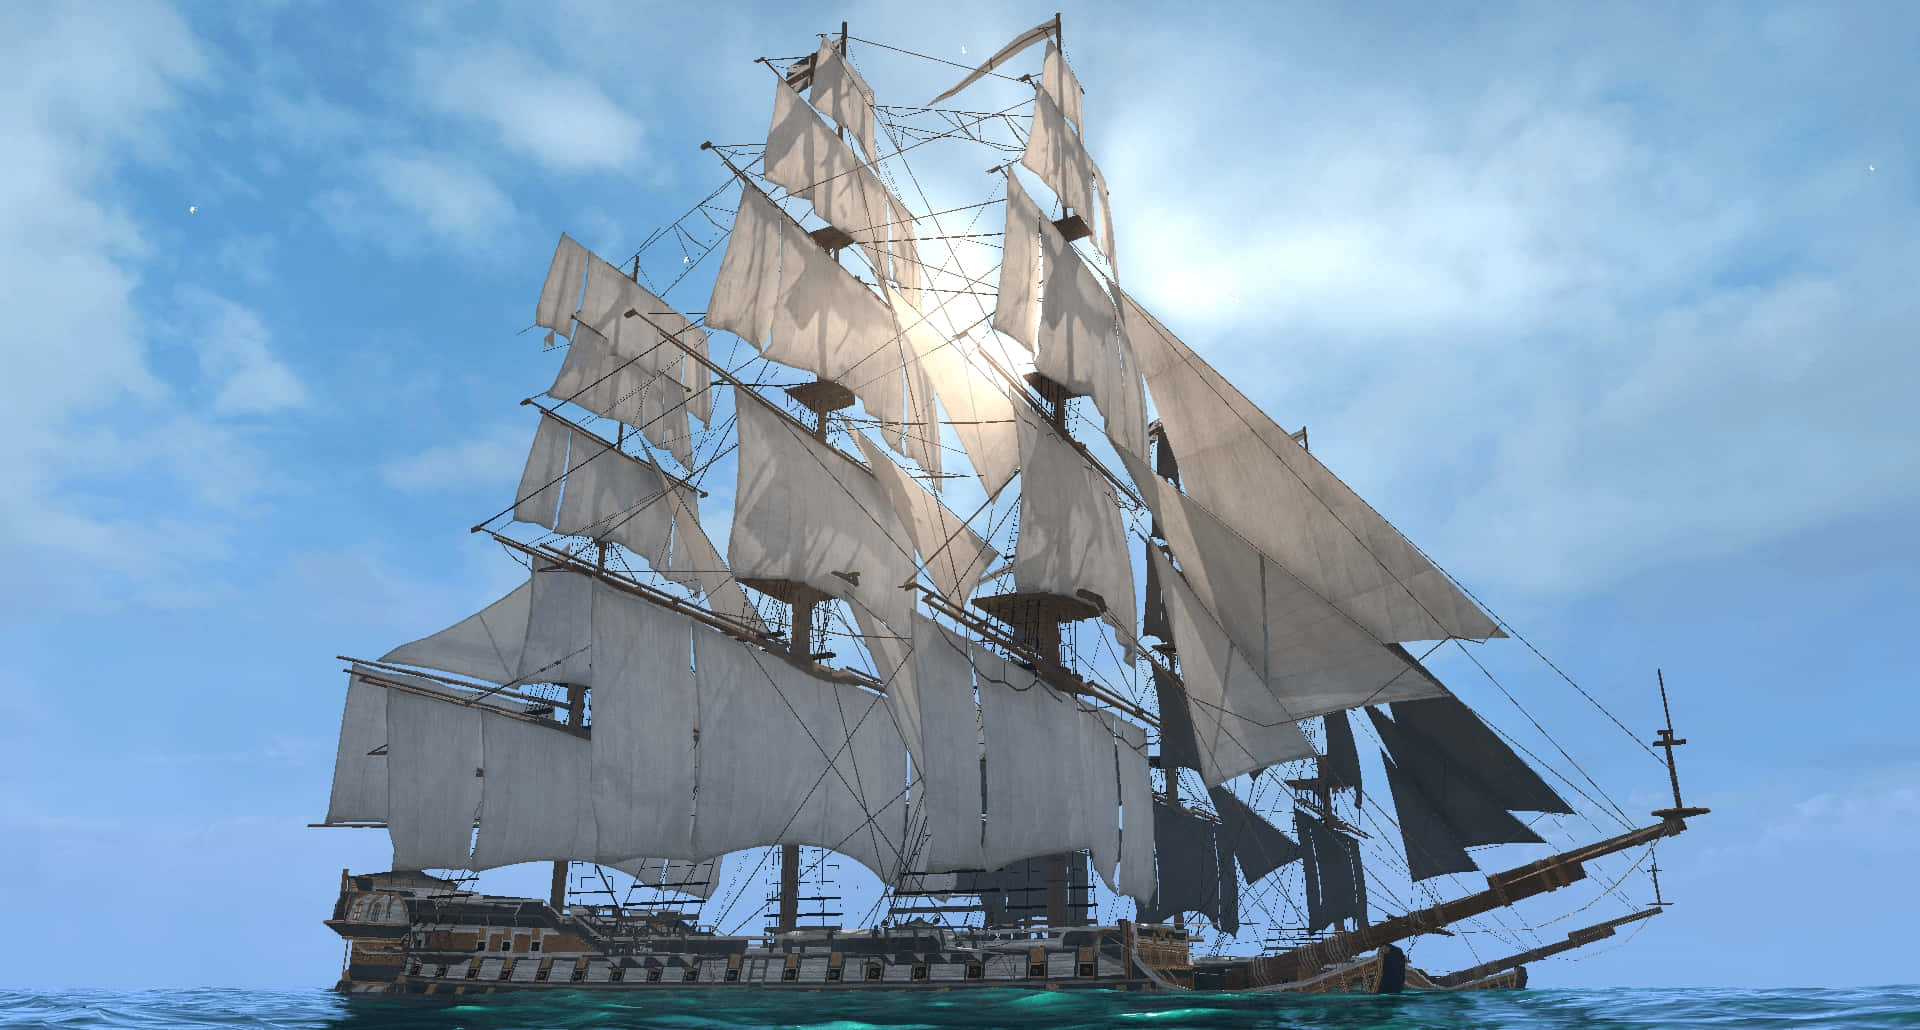 Intense Ship Combat in Assassin's Creed 4 Black Flag Wallpaper